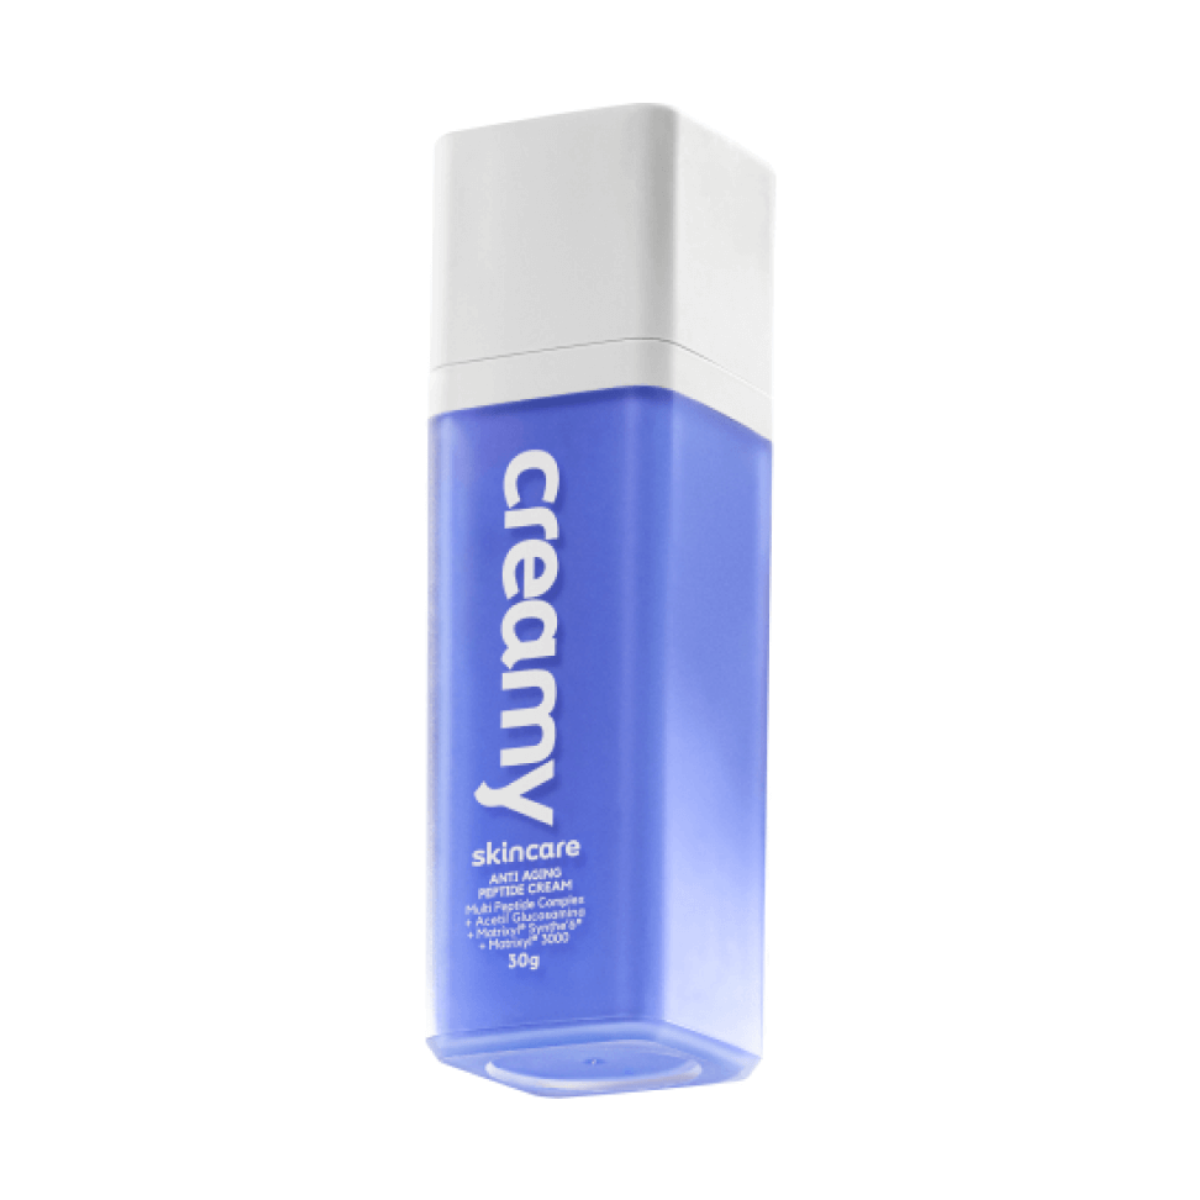 Creamy Peptide Cream - Anti-Aging Firming Moisturizer - Wrinkle Reducer